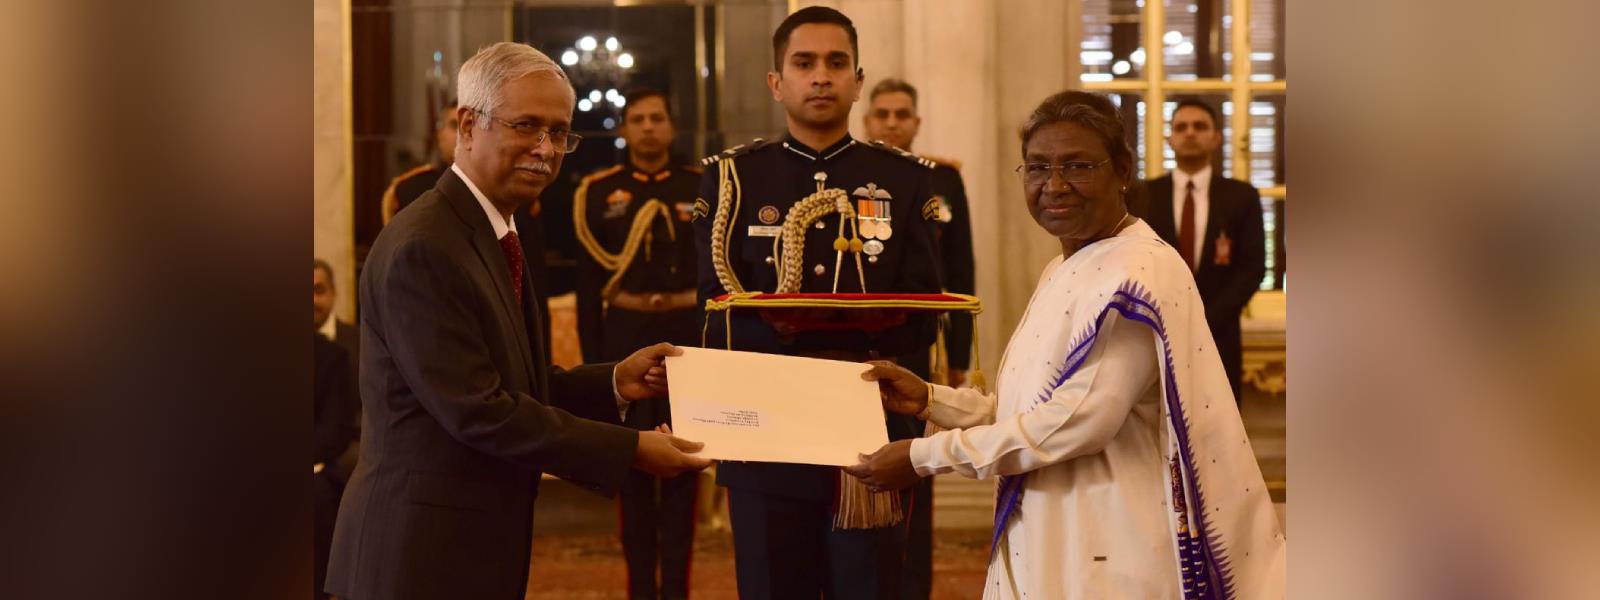 President Smt. Droupadi Murmu received credentials from H. E. Mr. Md. Mustafizur Rahman, High Commissioner of Bangladesh at Rashtrapati Bhavan